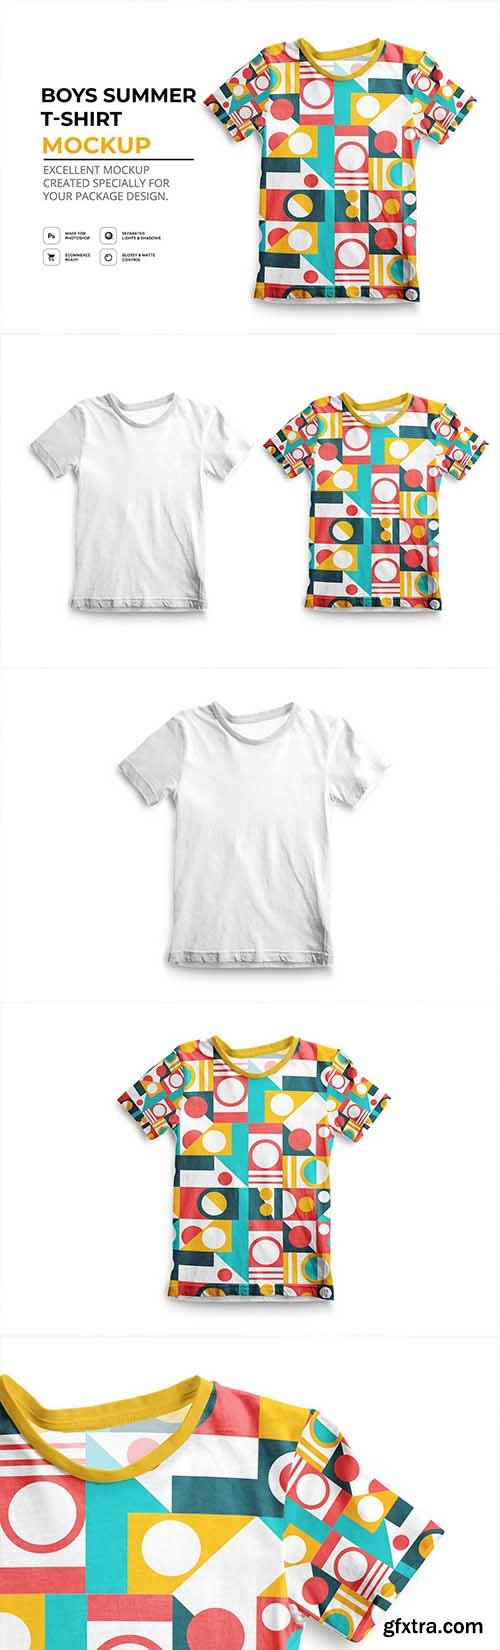 CreativeMarket - Boys Summer T-Shirt Mockup 6424574